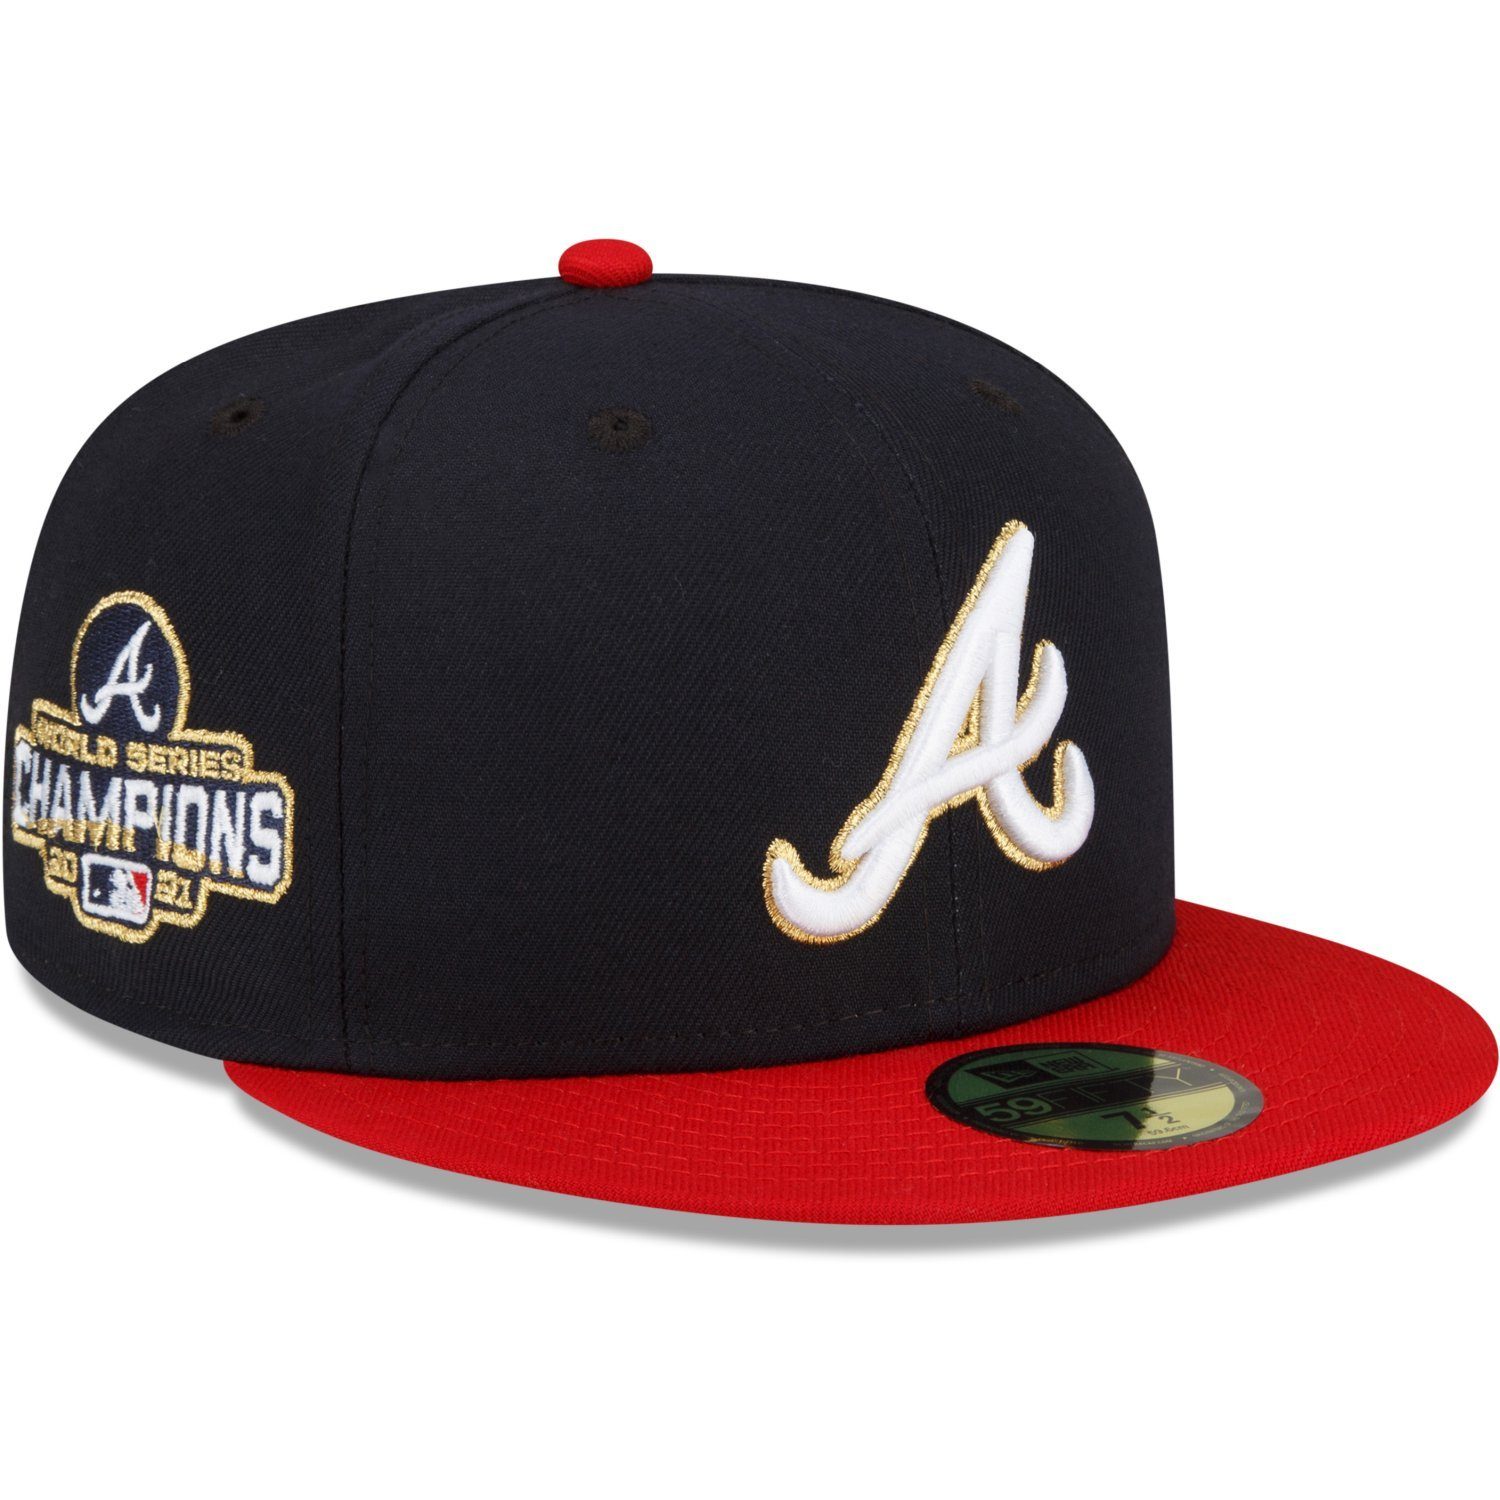 New Era Fitted Cap 59Fifty MLB GOLD Atlanta Braves